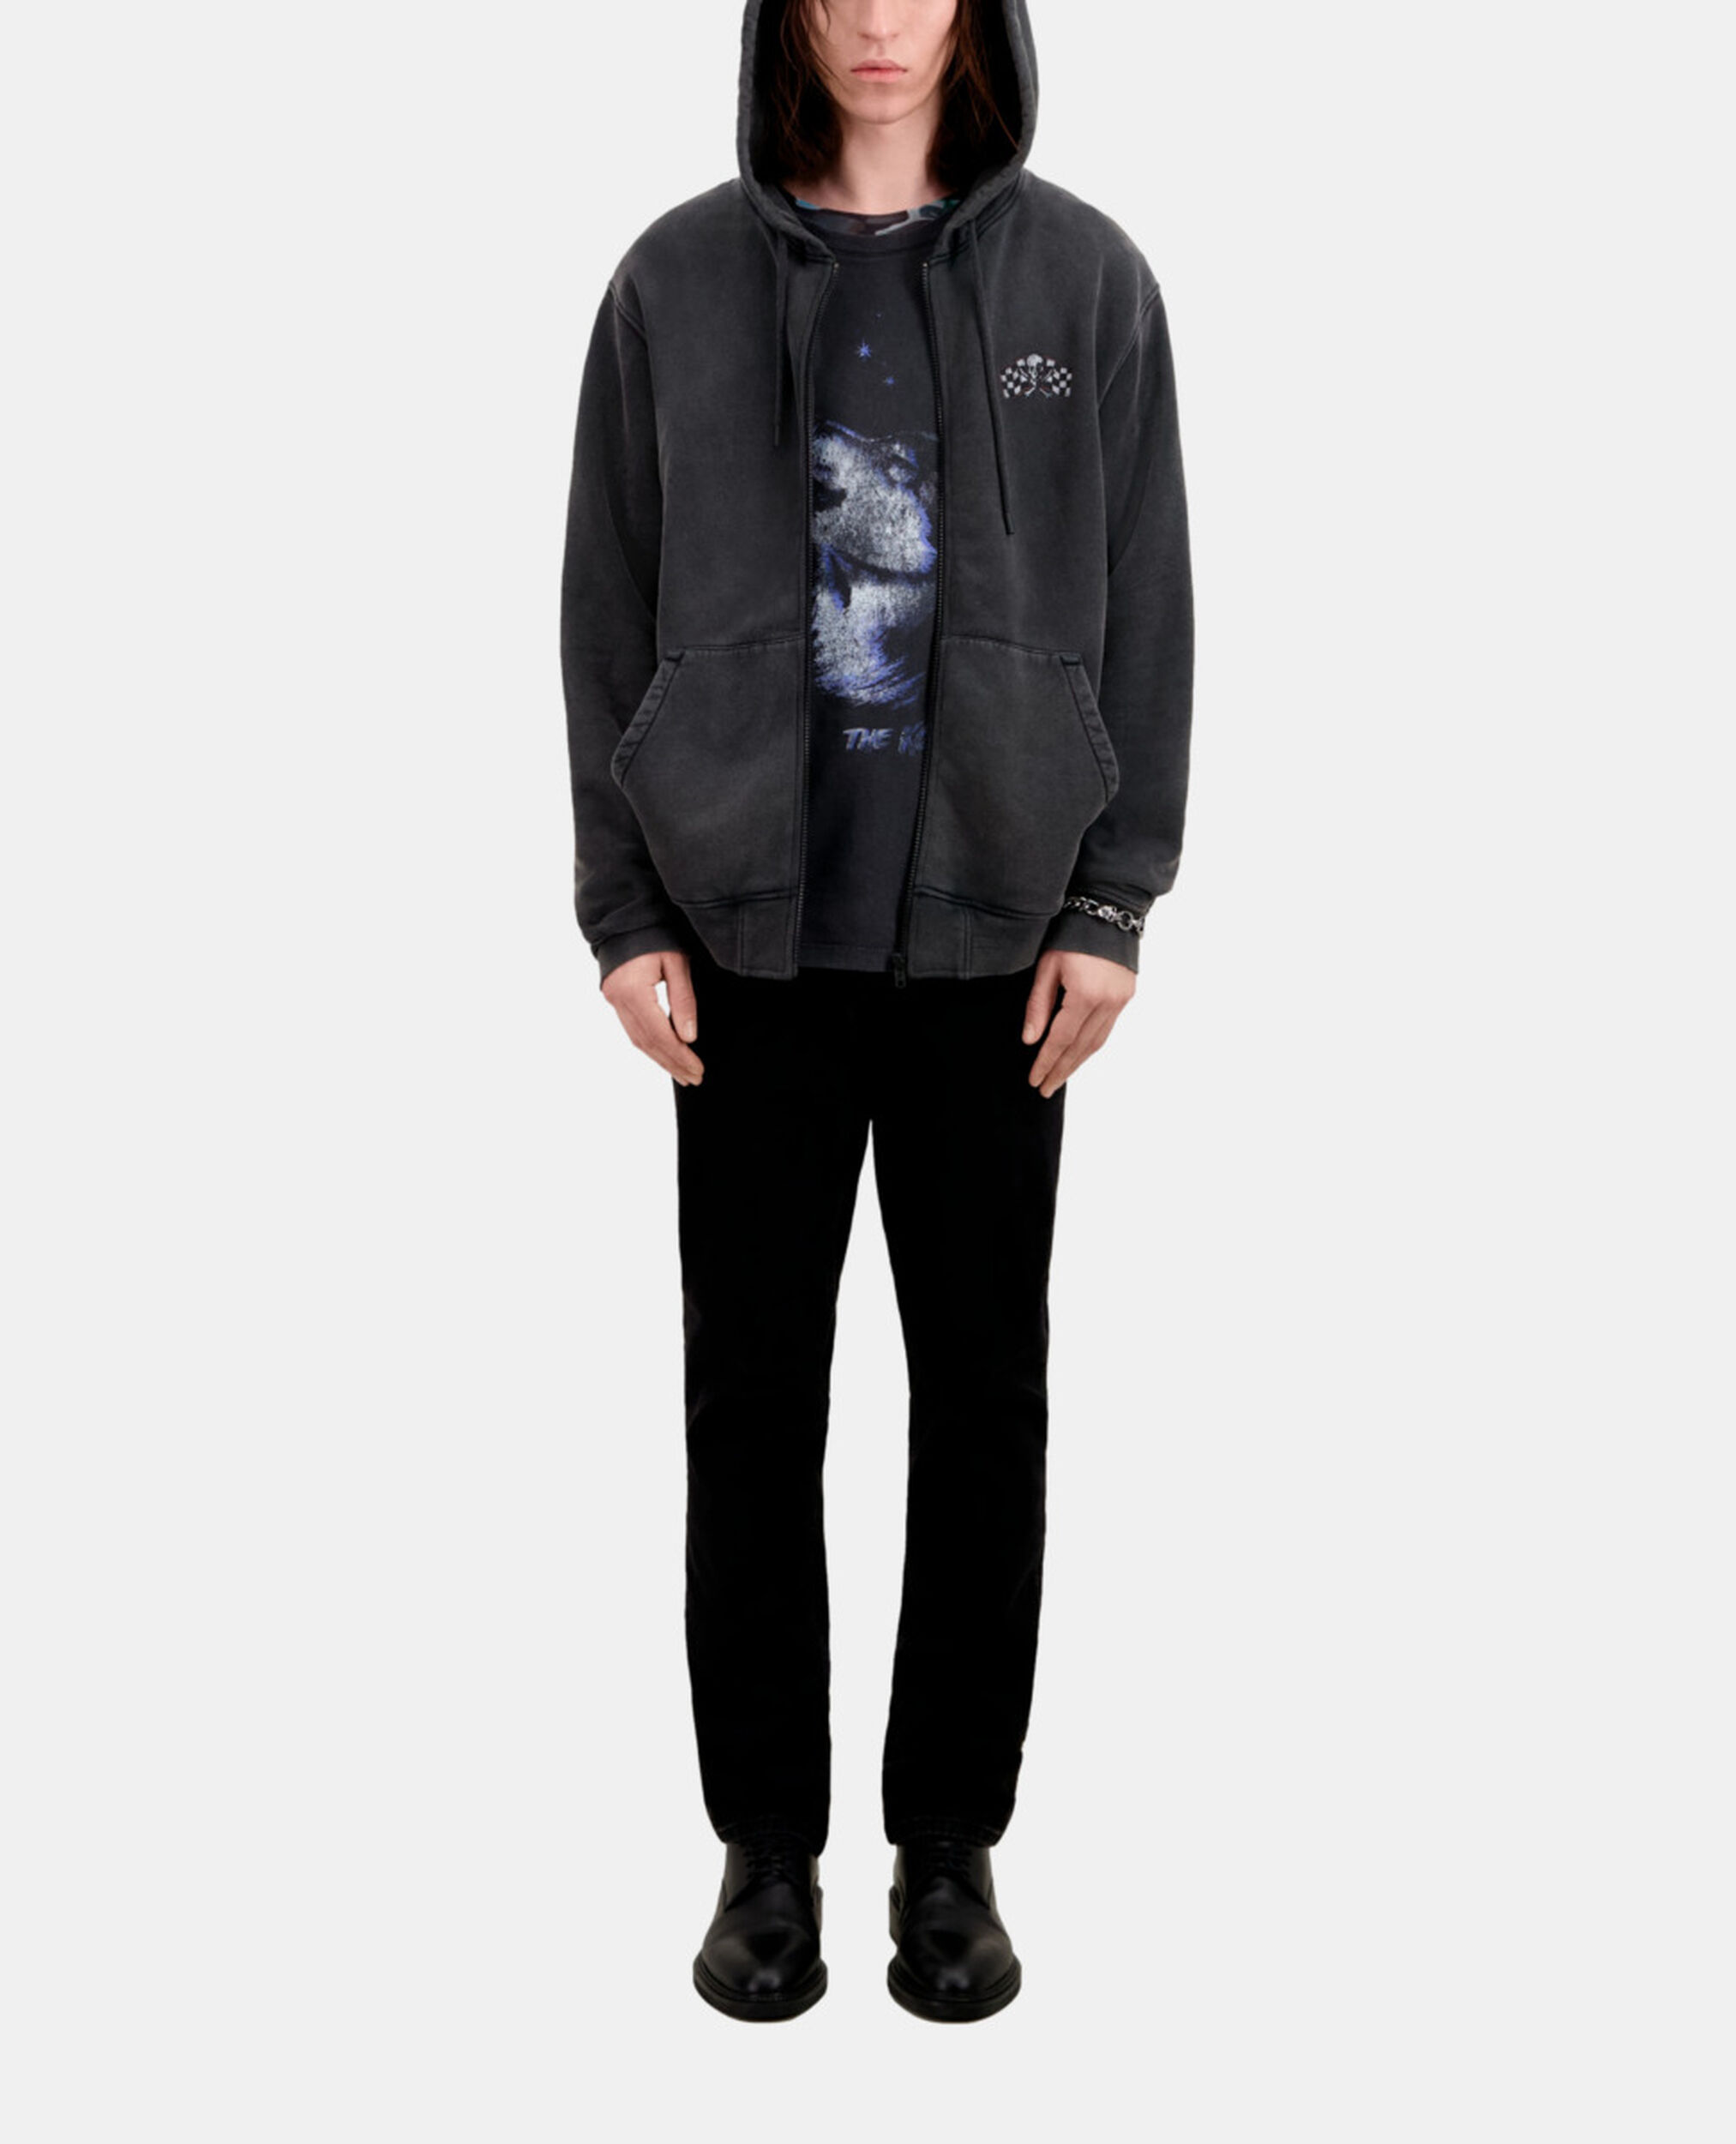 Herren Schwarzes Kapuzensweatshirt mit Siebdruck, BLACK WASHED, hi-res image number null